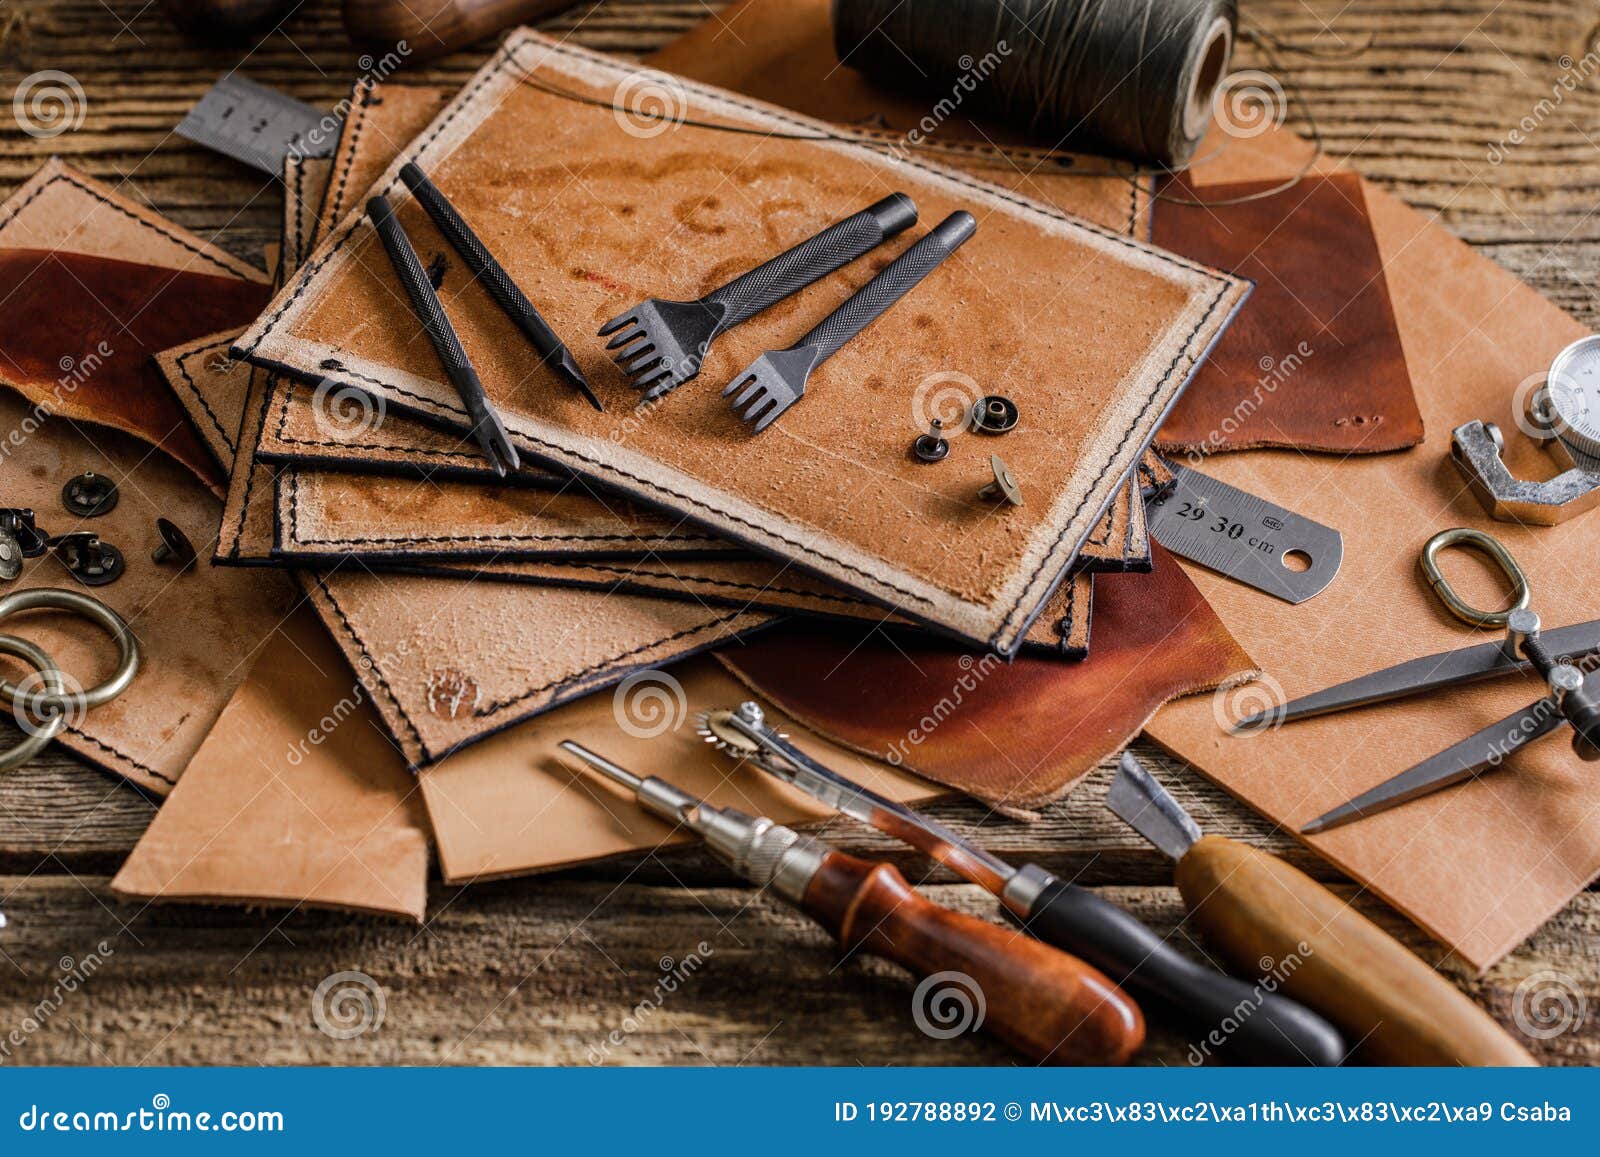 Leathercraft tools Stock Photo by ©karnauhov 79177956